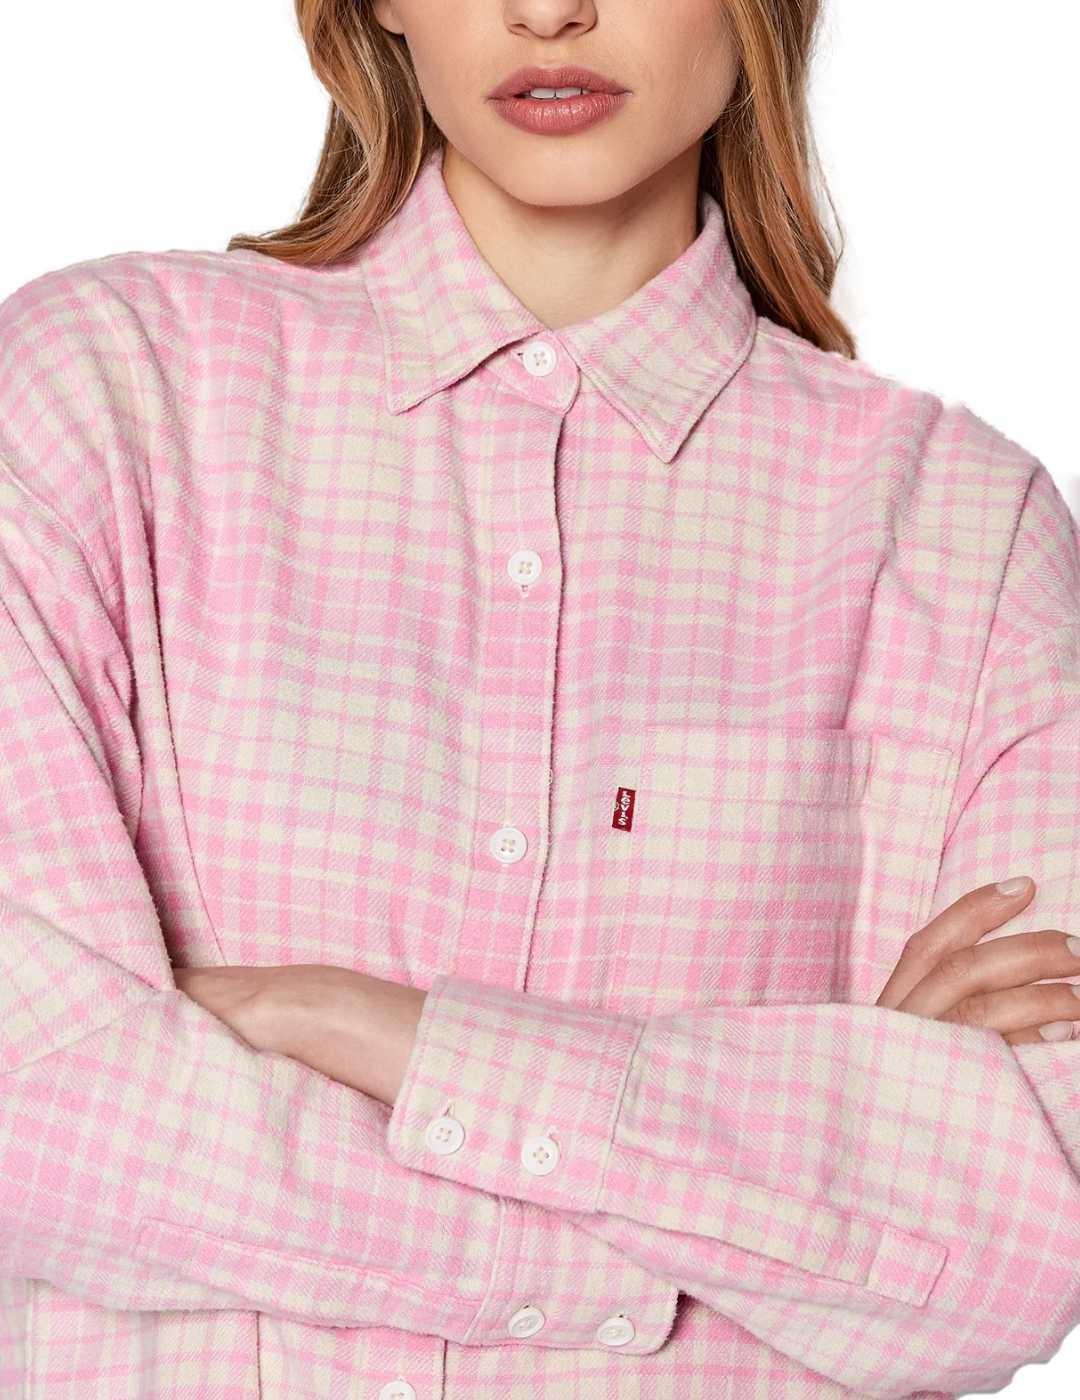 Camisa Levi's Nola Menswear rosa para mujer -b